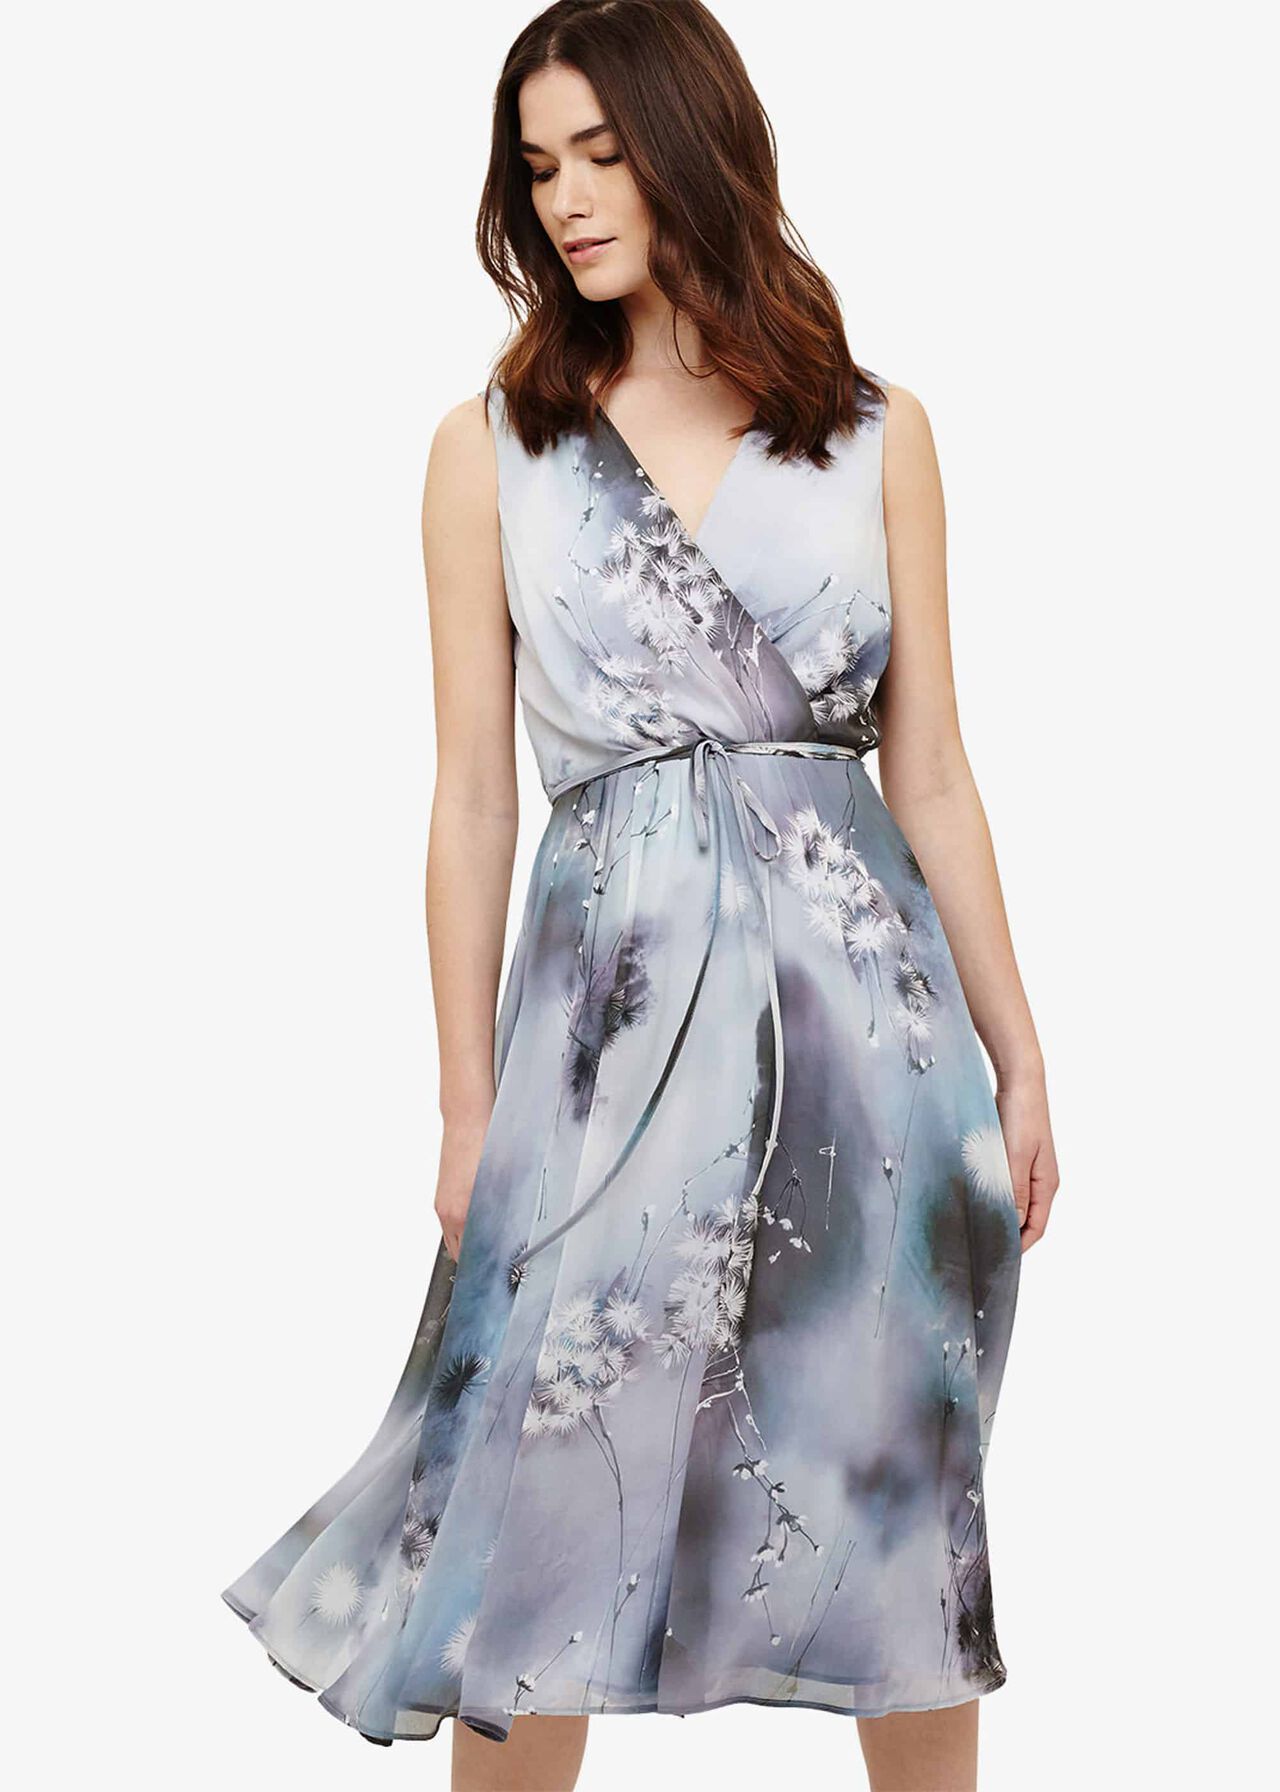 Dandilion Print Dress